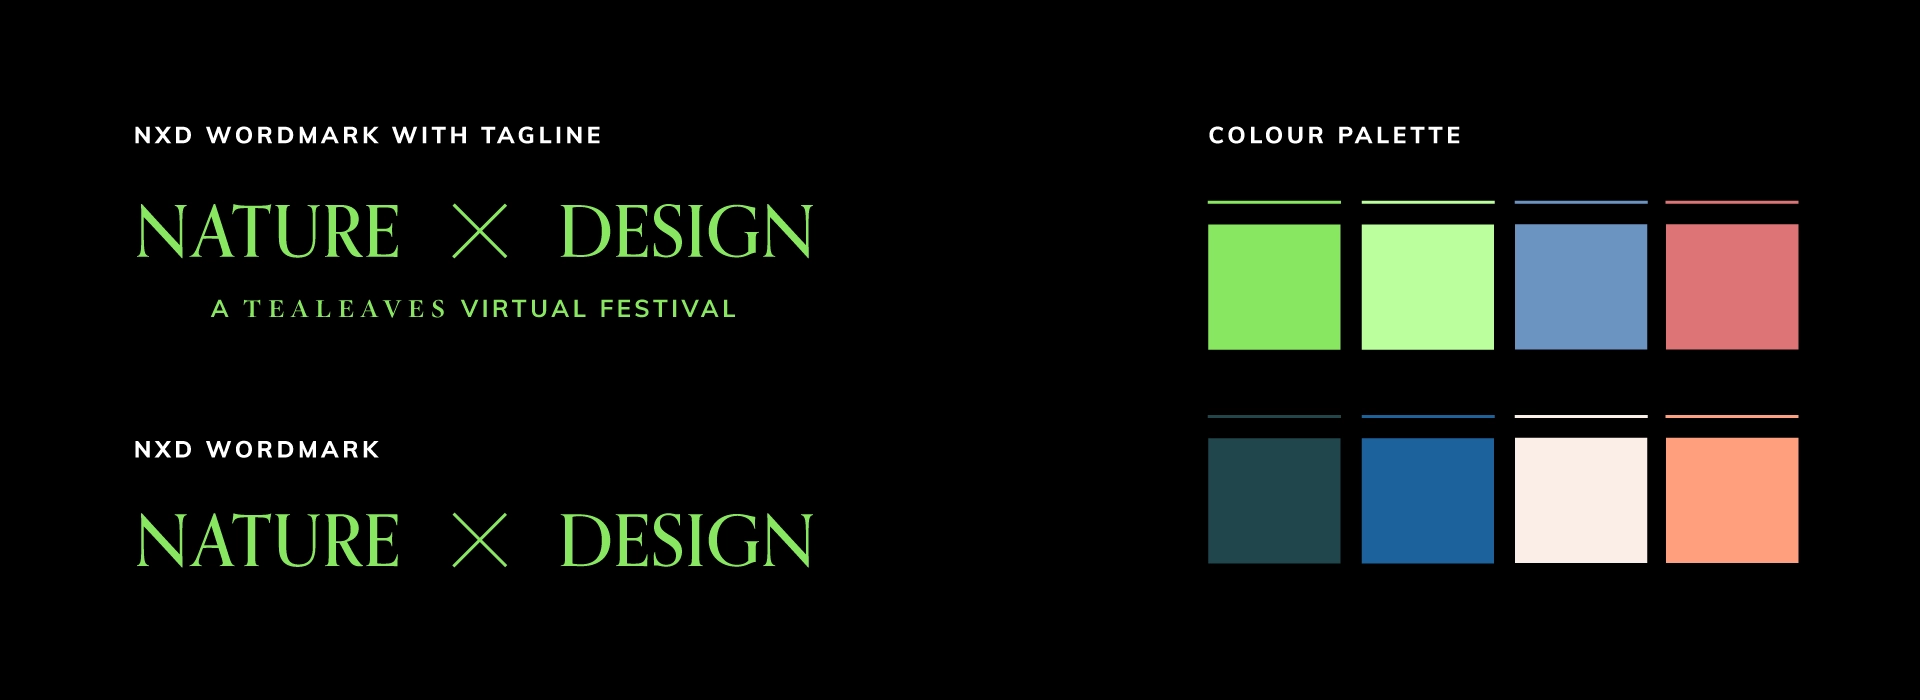 Nature X Design logos and colour palette